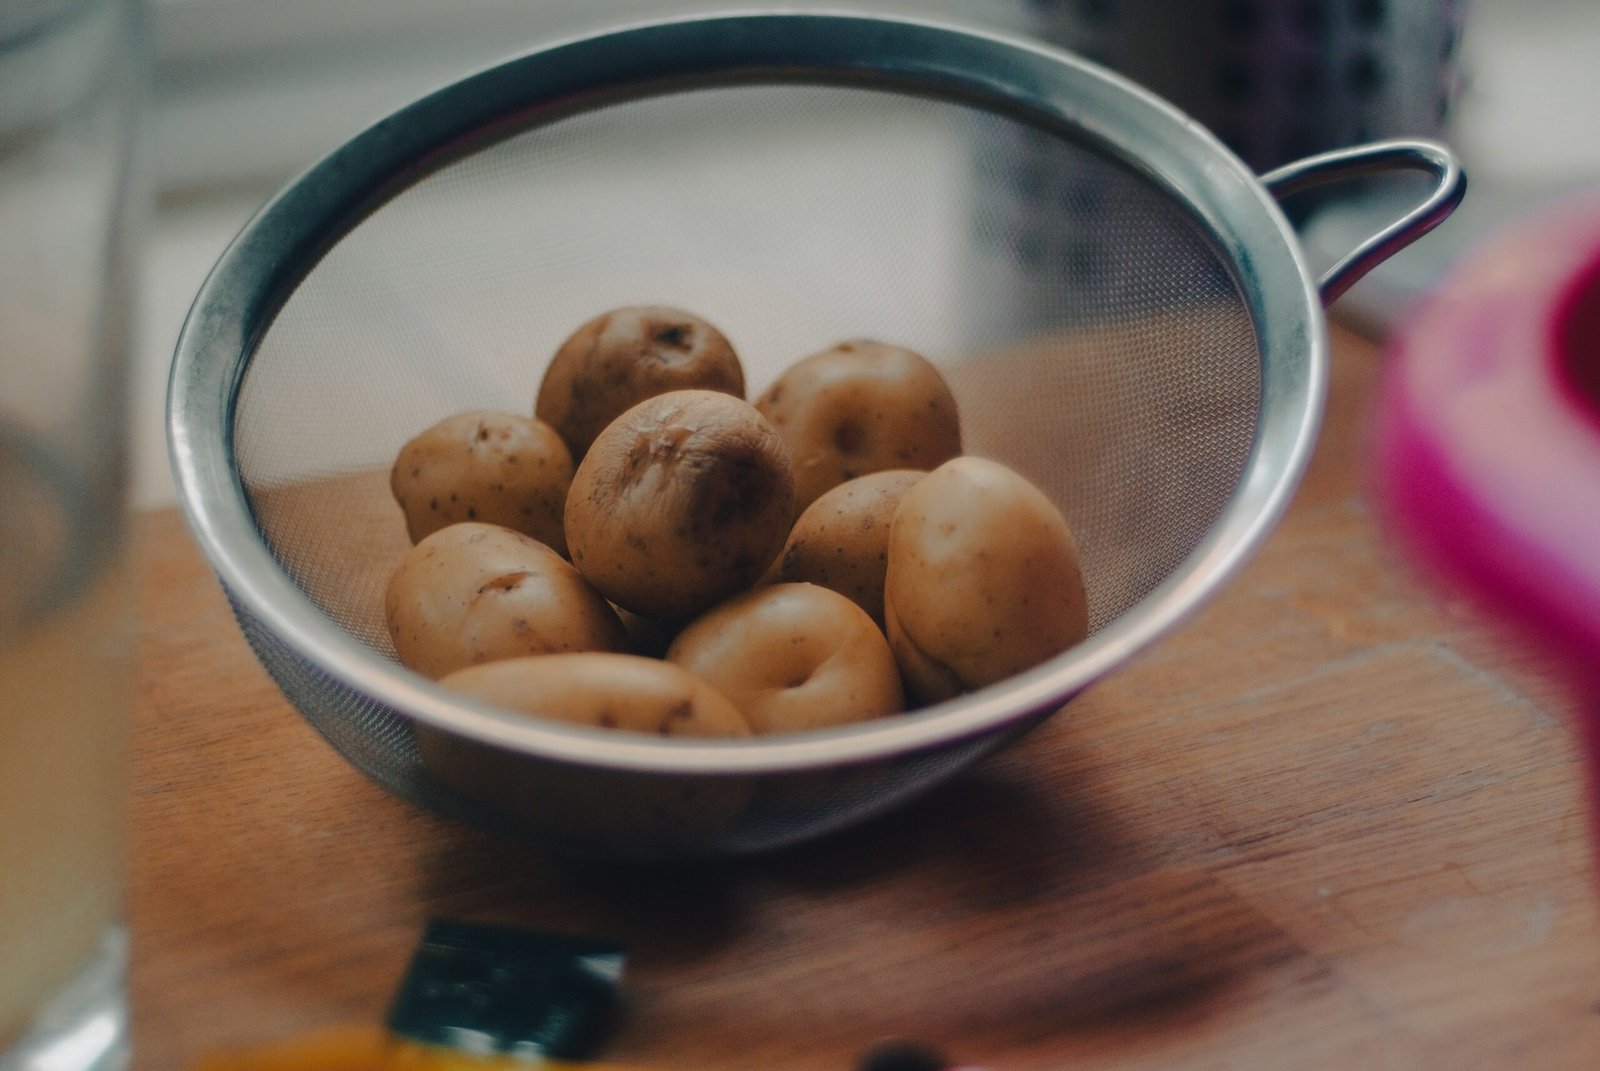 Lipton Onion Soup Potatoes: A Delicious Oven-Roasted Recipe